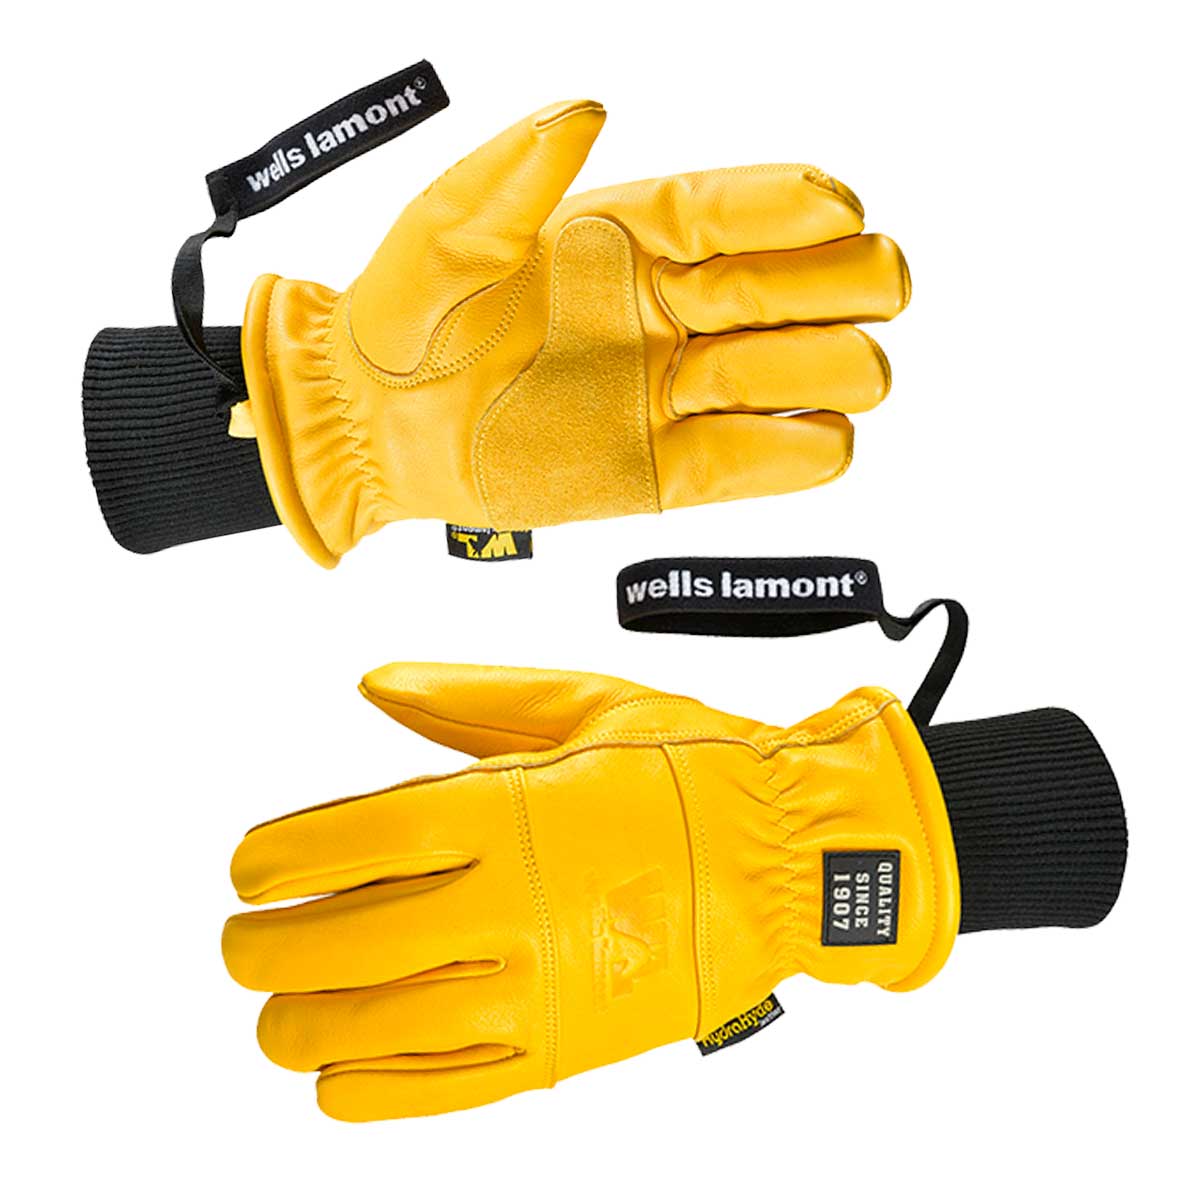 Wells Lamont Men's Leather Work Gloves Medium Size 6-pair